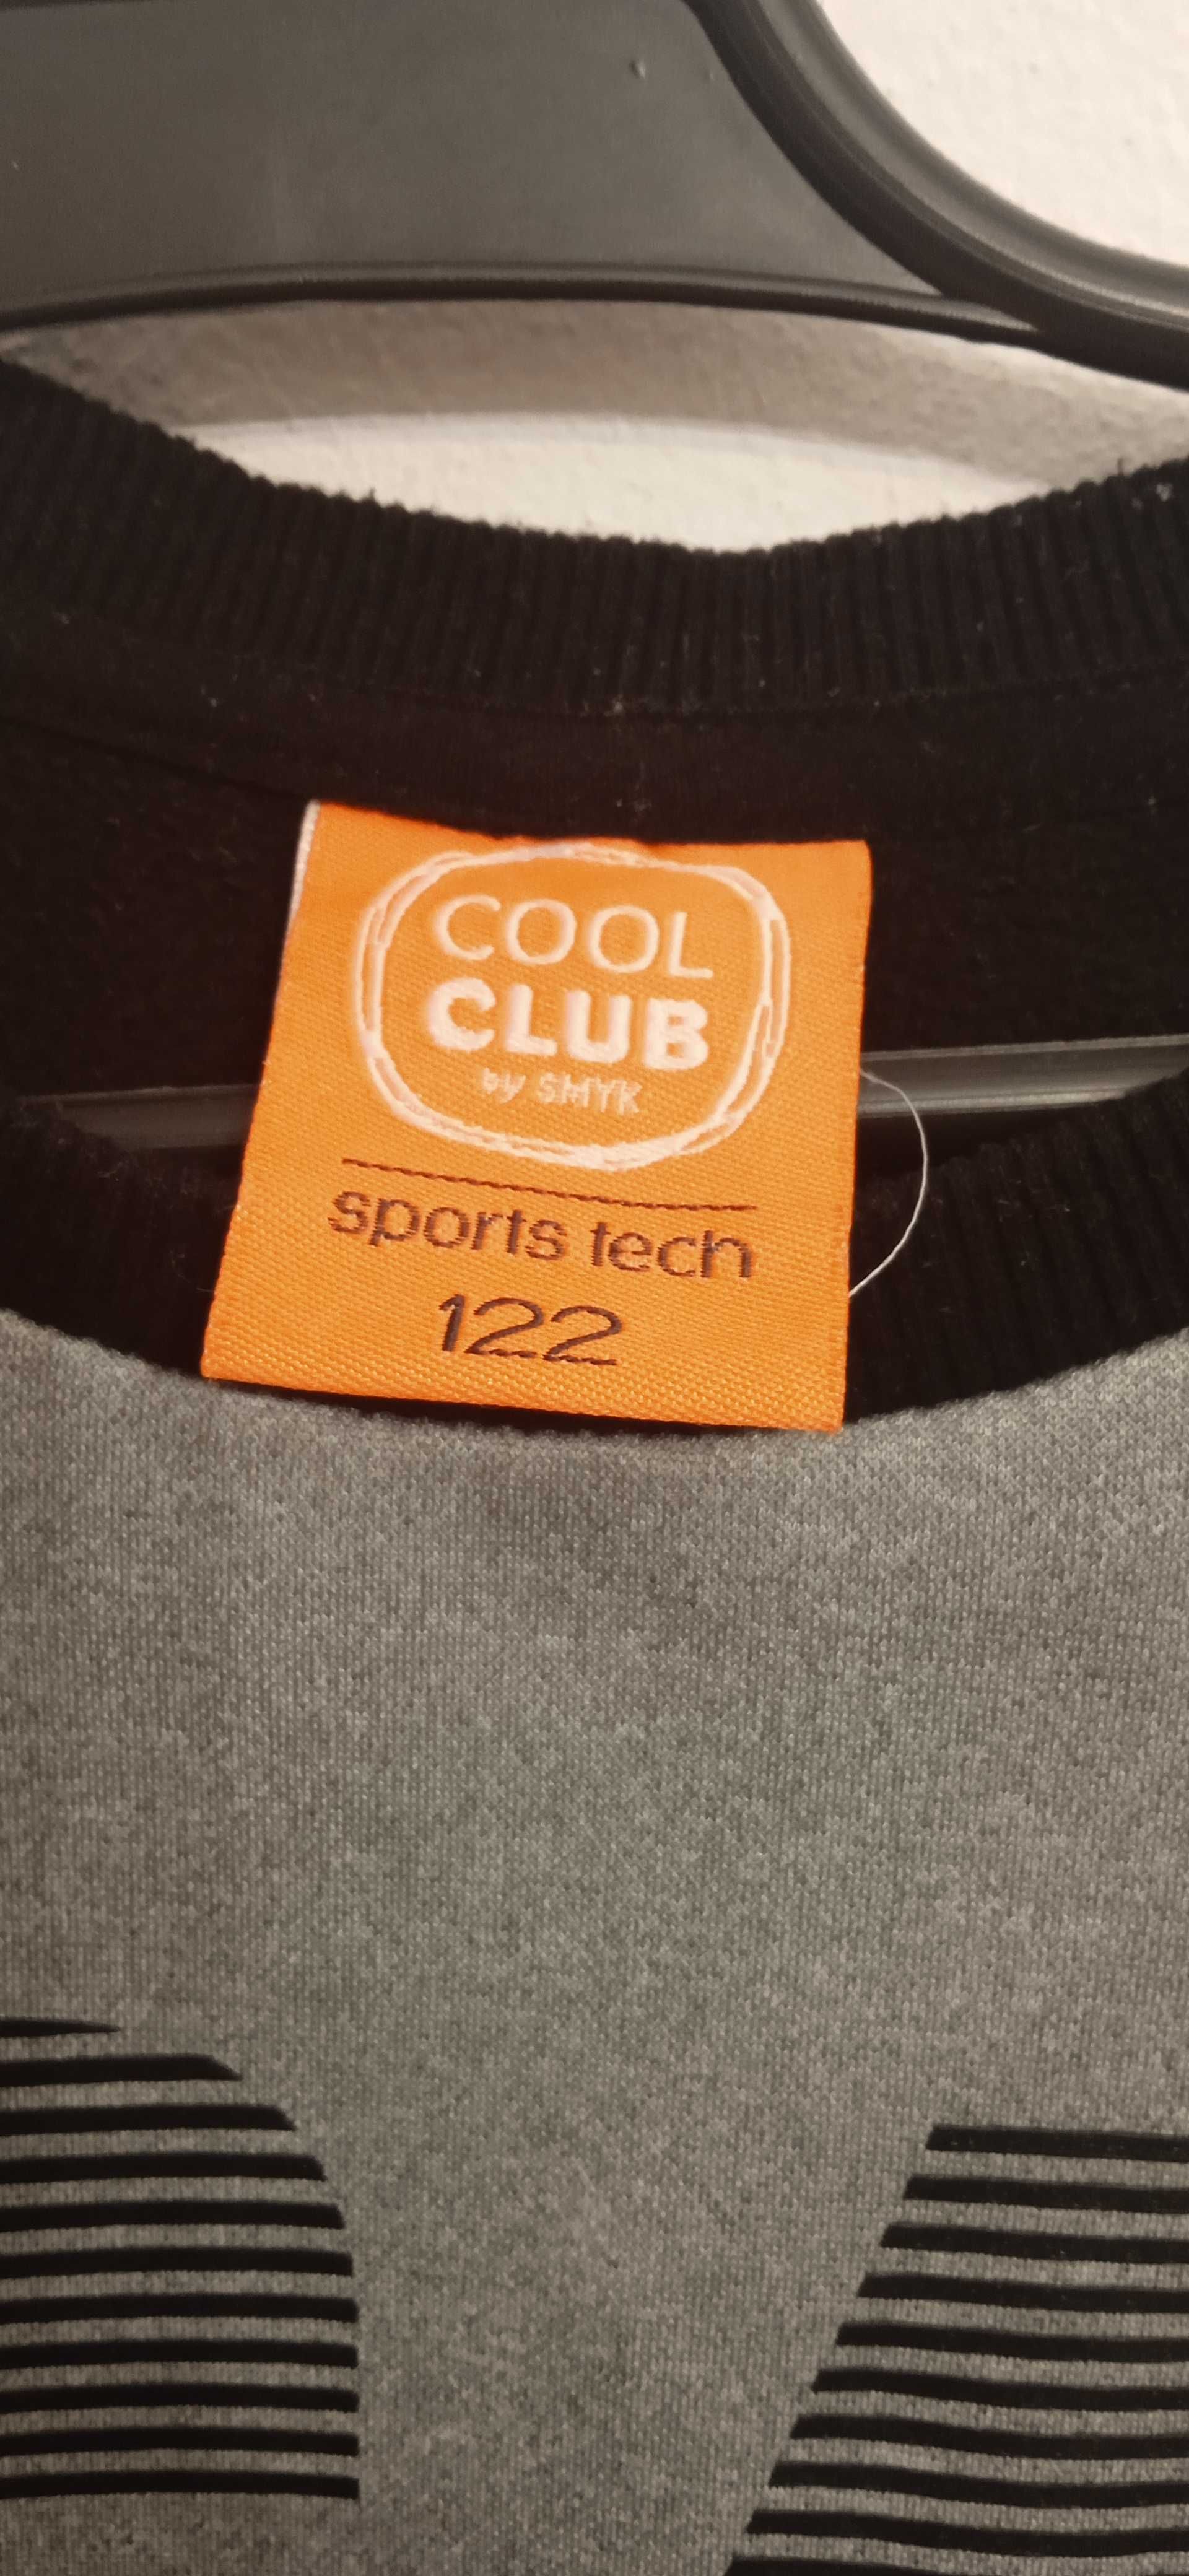 Bluza chłopięca cool club